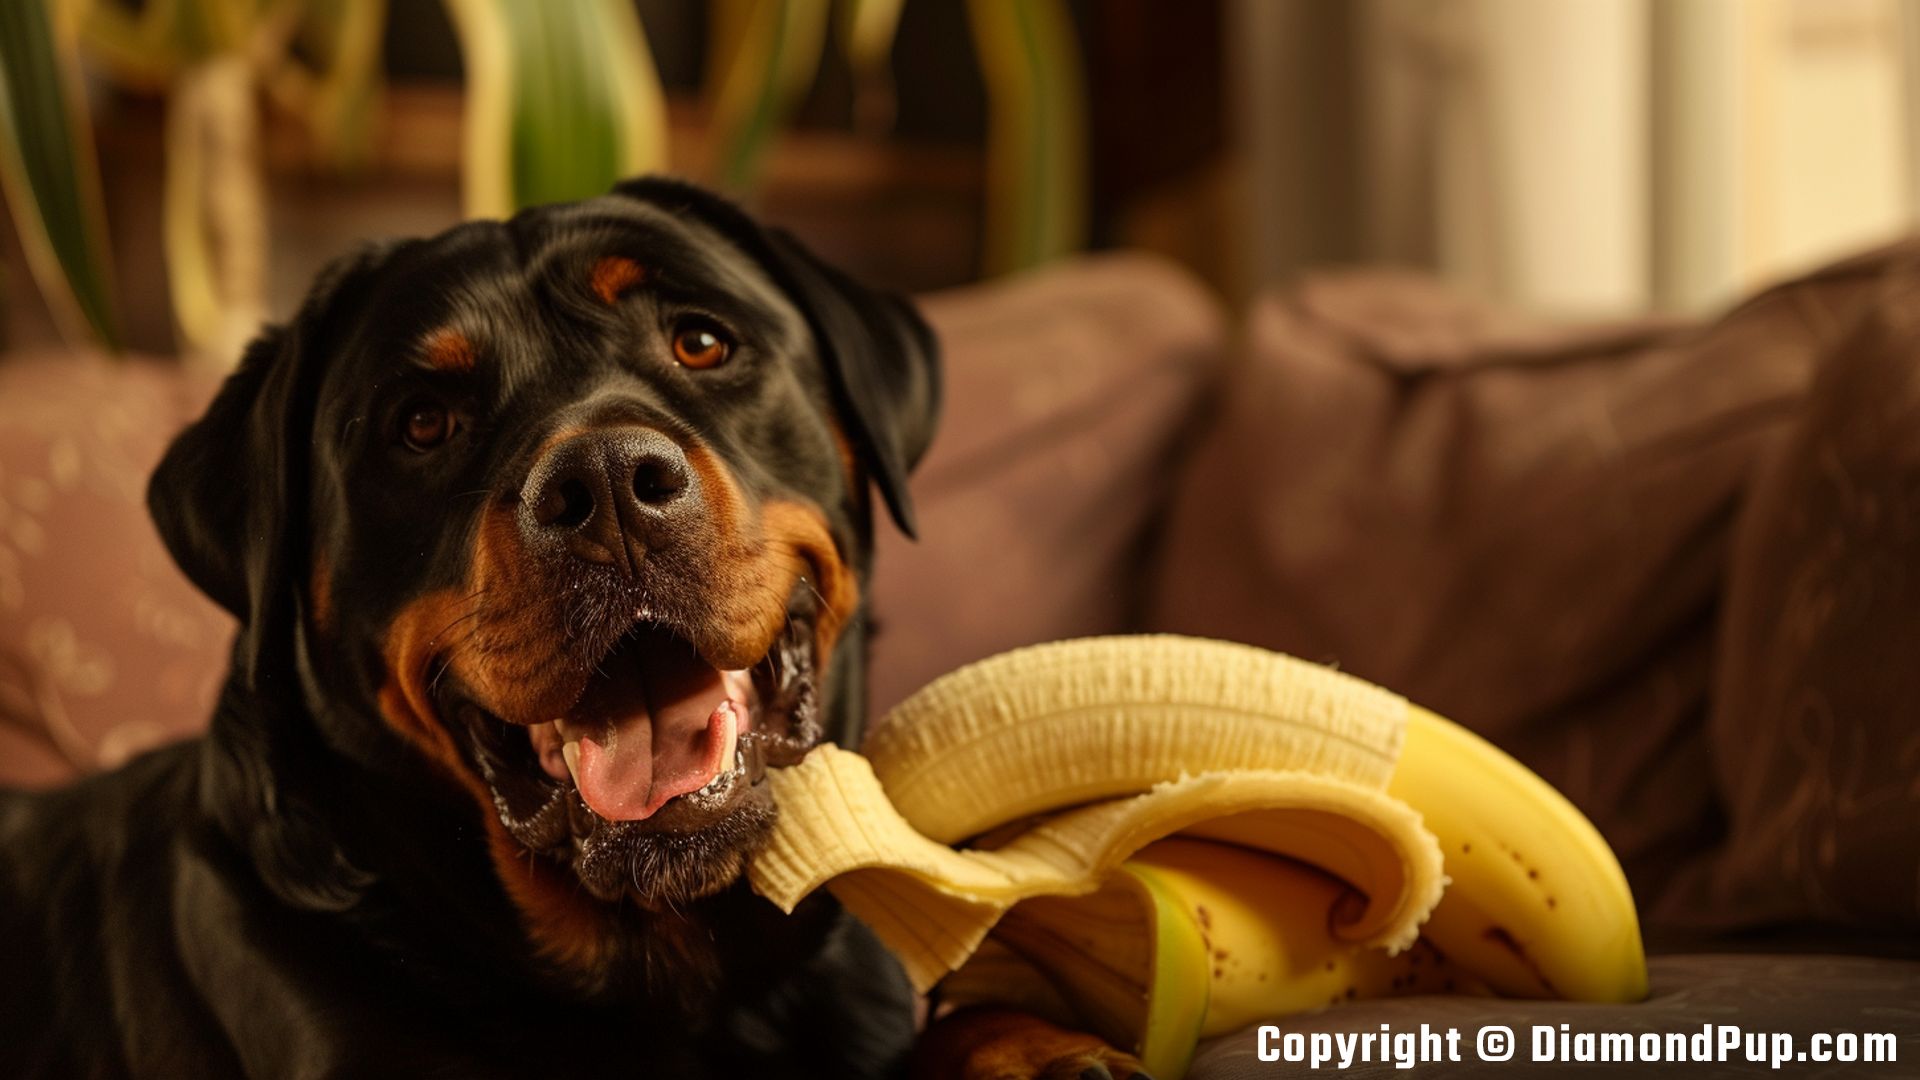 Photograph of an Adorable Rottweiler Eating Banana